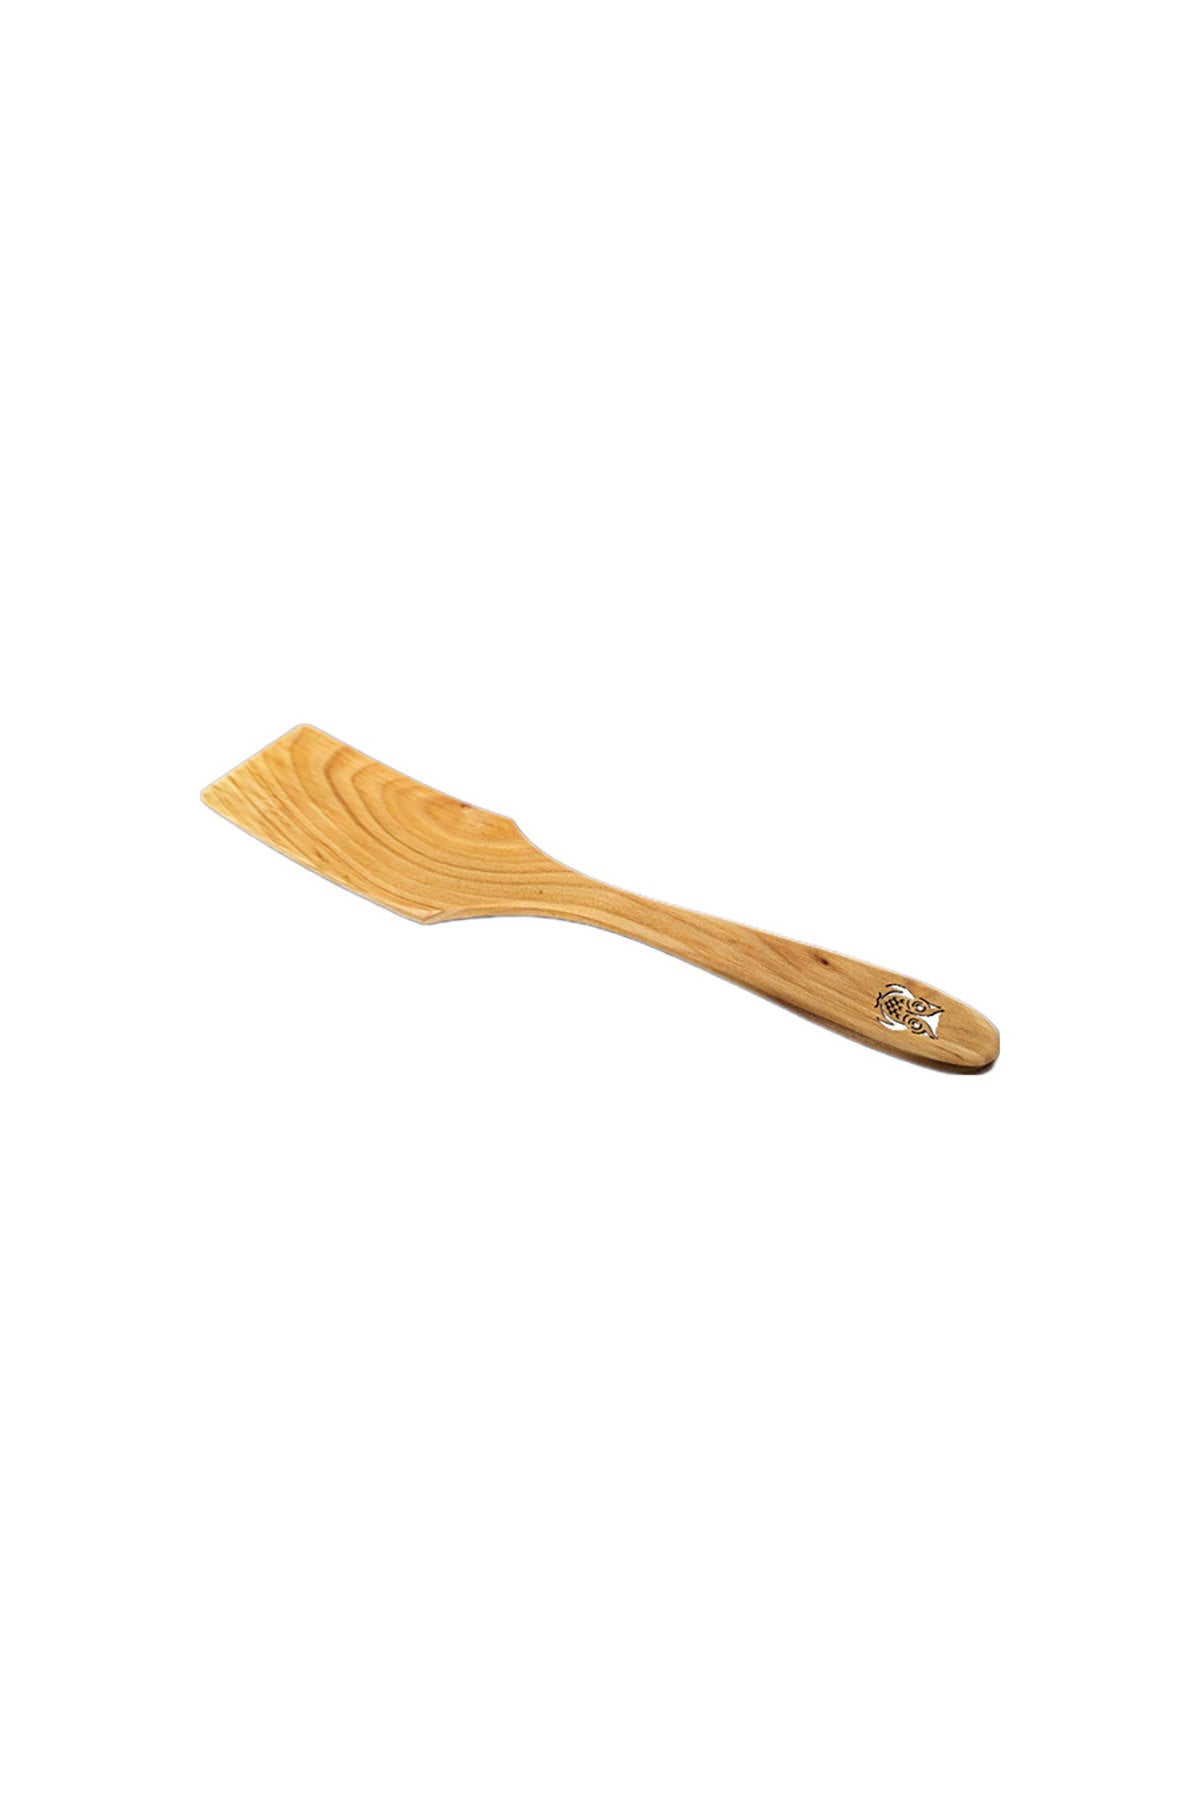 Alder wood spatula | 27 x 5.5 cm, curved | Various designs